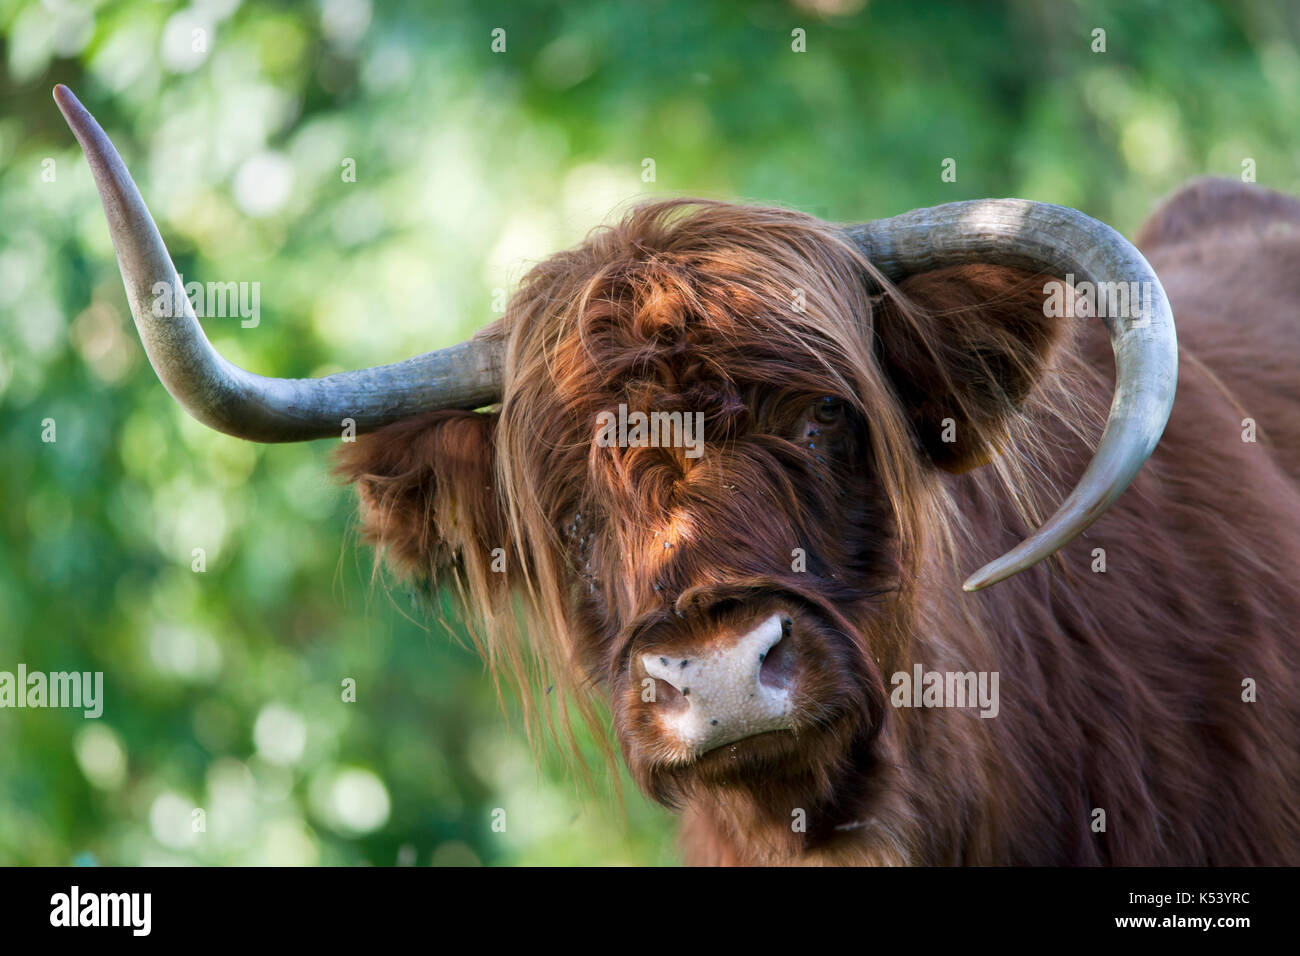 Highland cow with strange horns Stock Photo